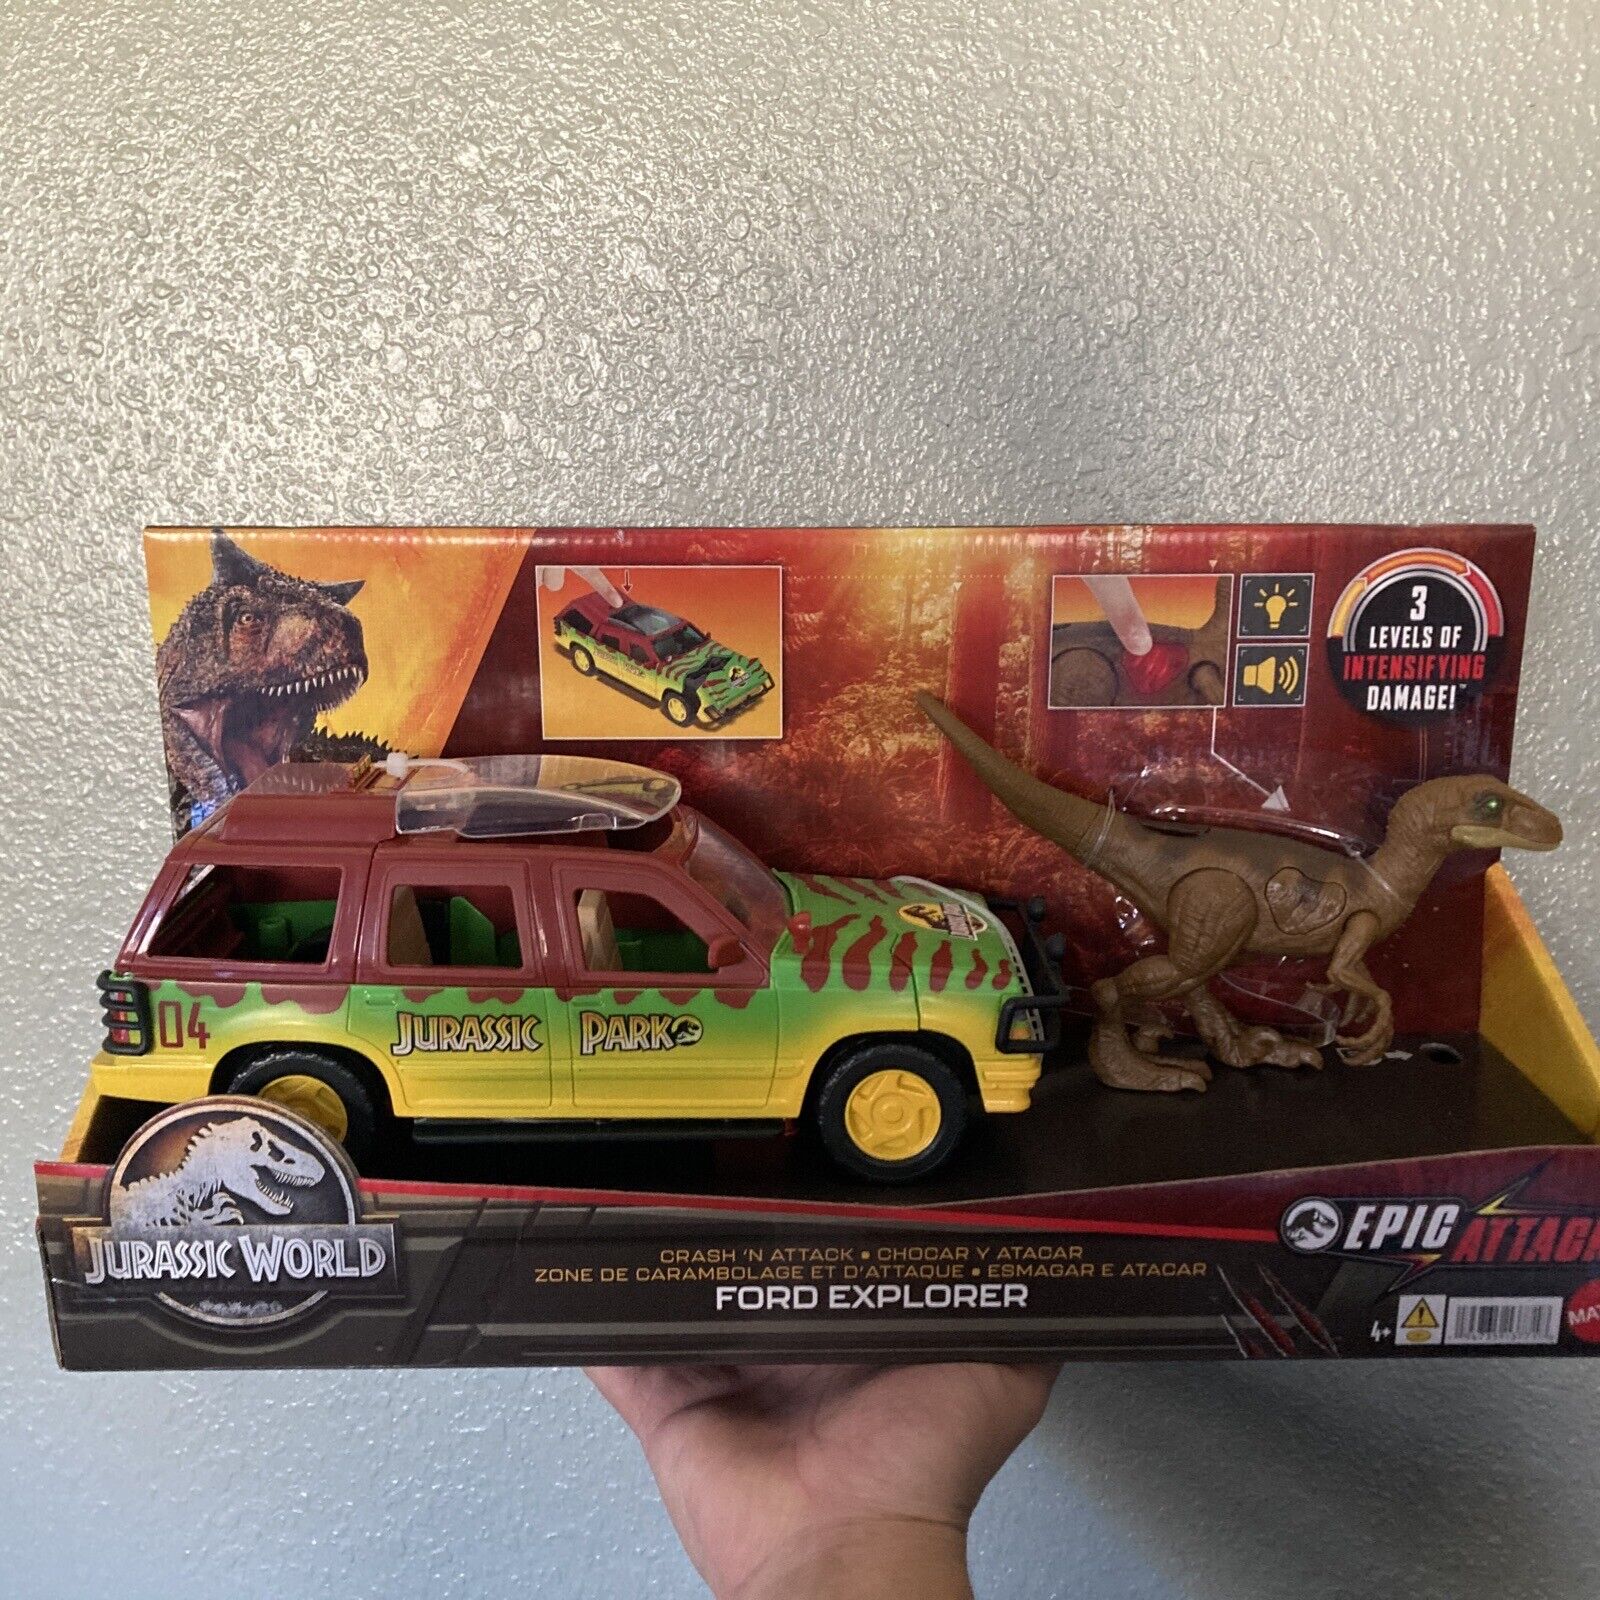 Jurassic World Park Epic Attack Crash ‘N Attack Ford Explorer Mattel Brand New